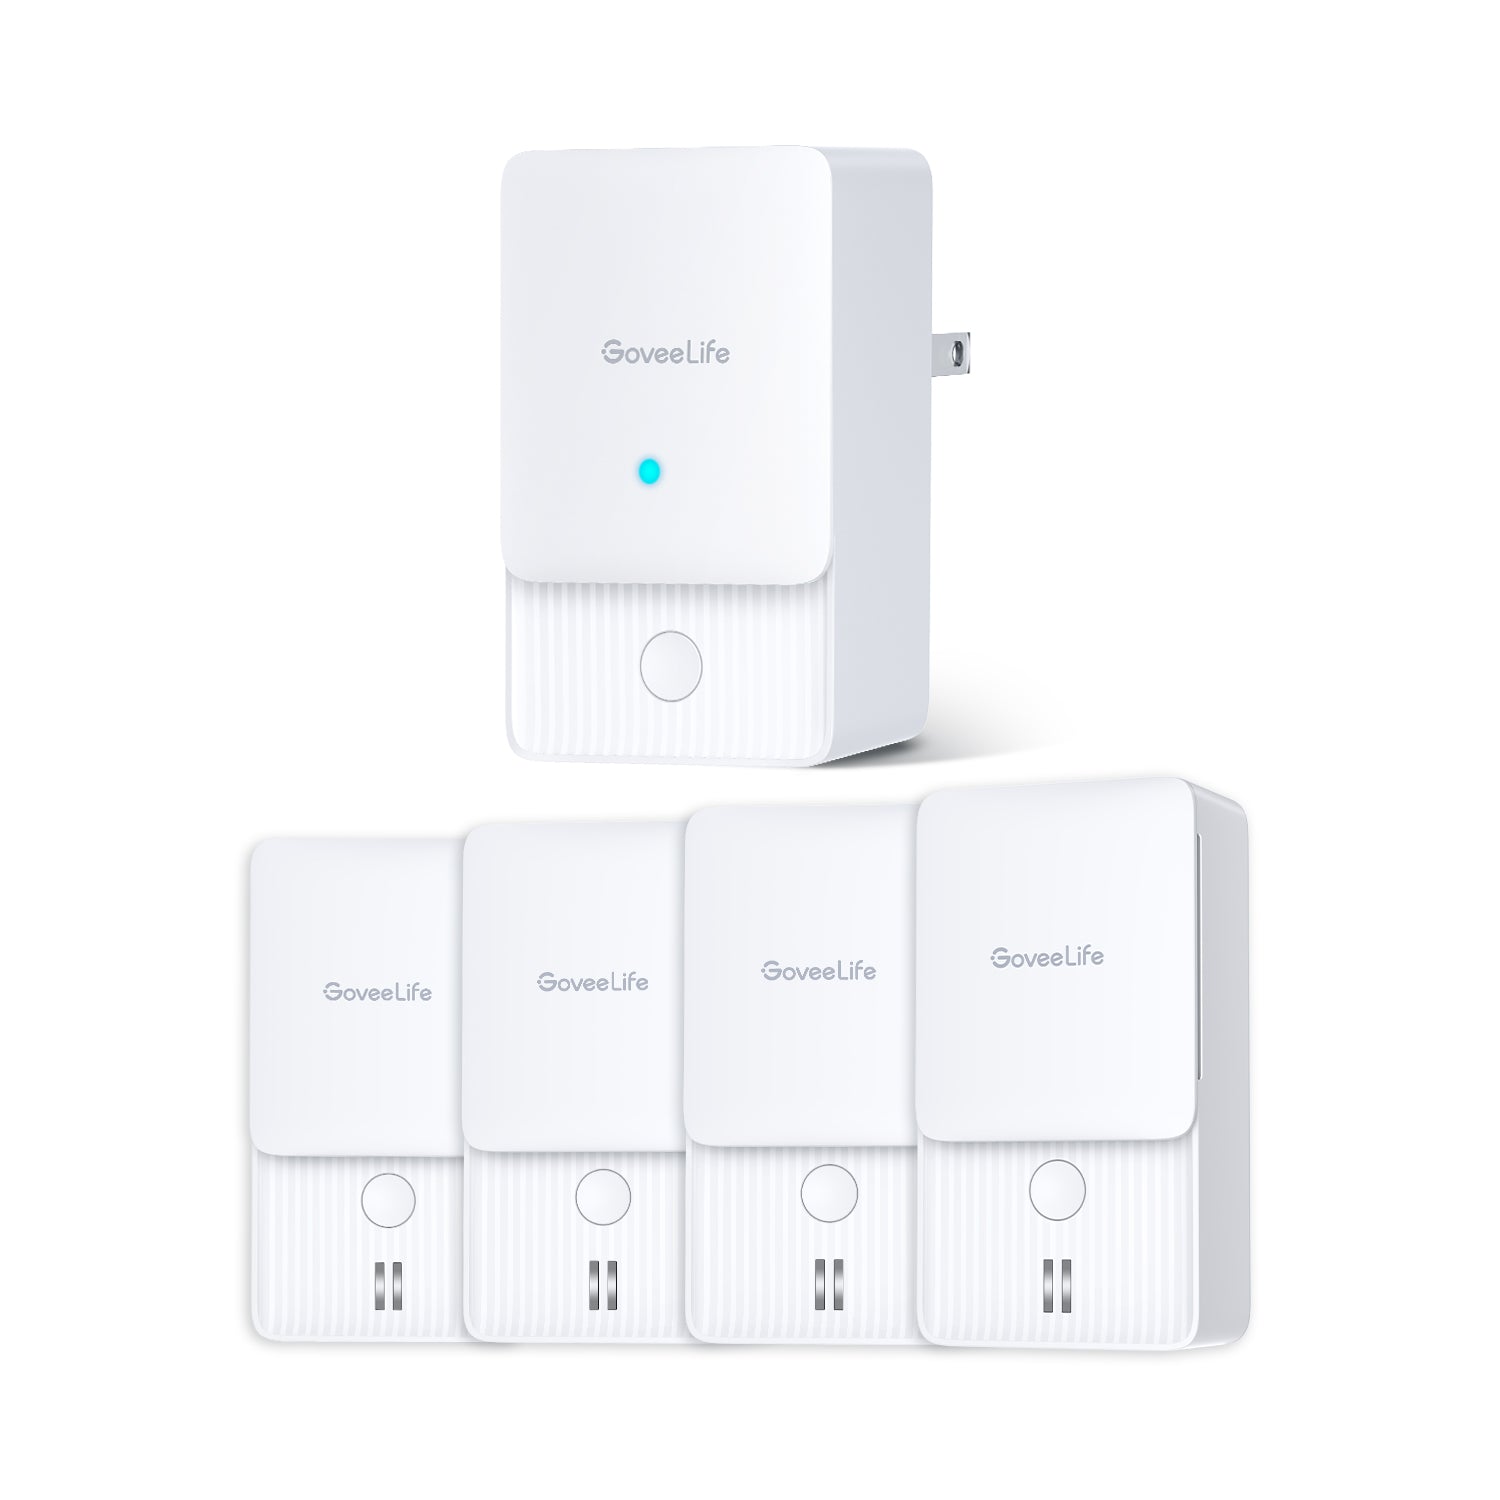 Govee Wifi Water Leak Detector v2: 1 Gateway & 4 Sensor Pack. Discounts on all versions until midnight tonight Dec 18. $52.5